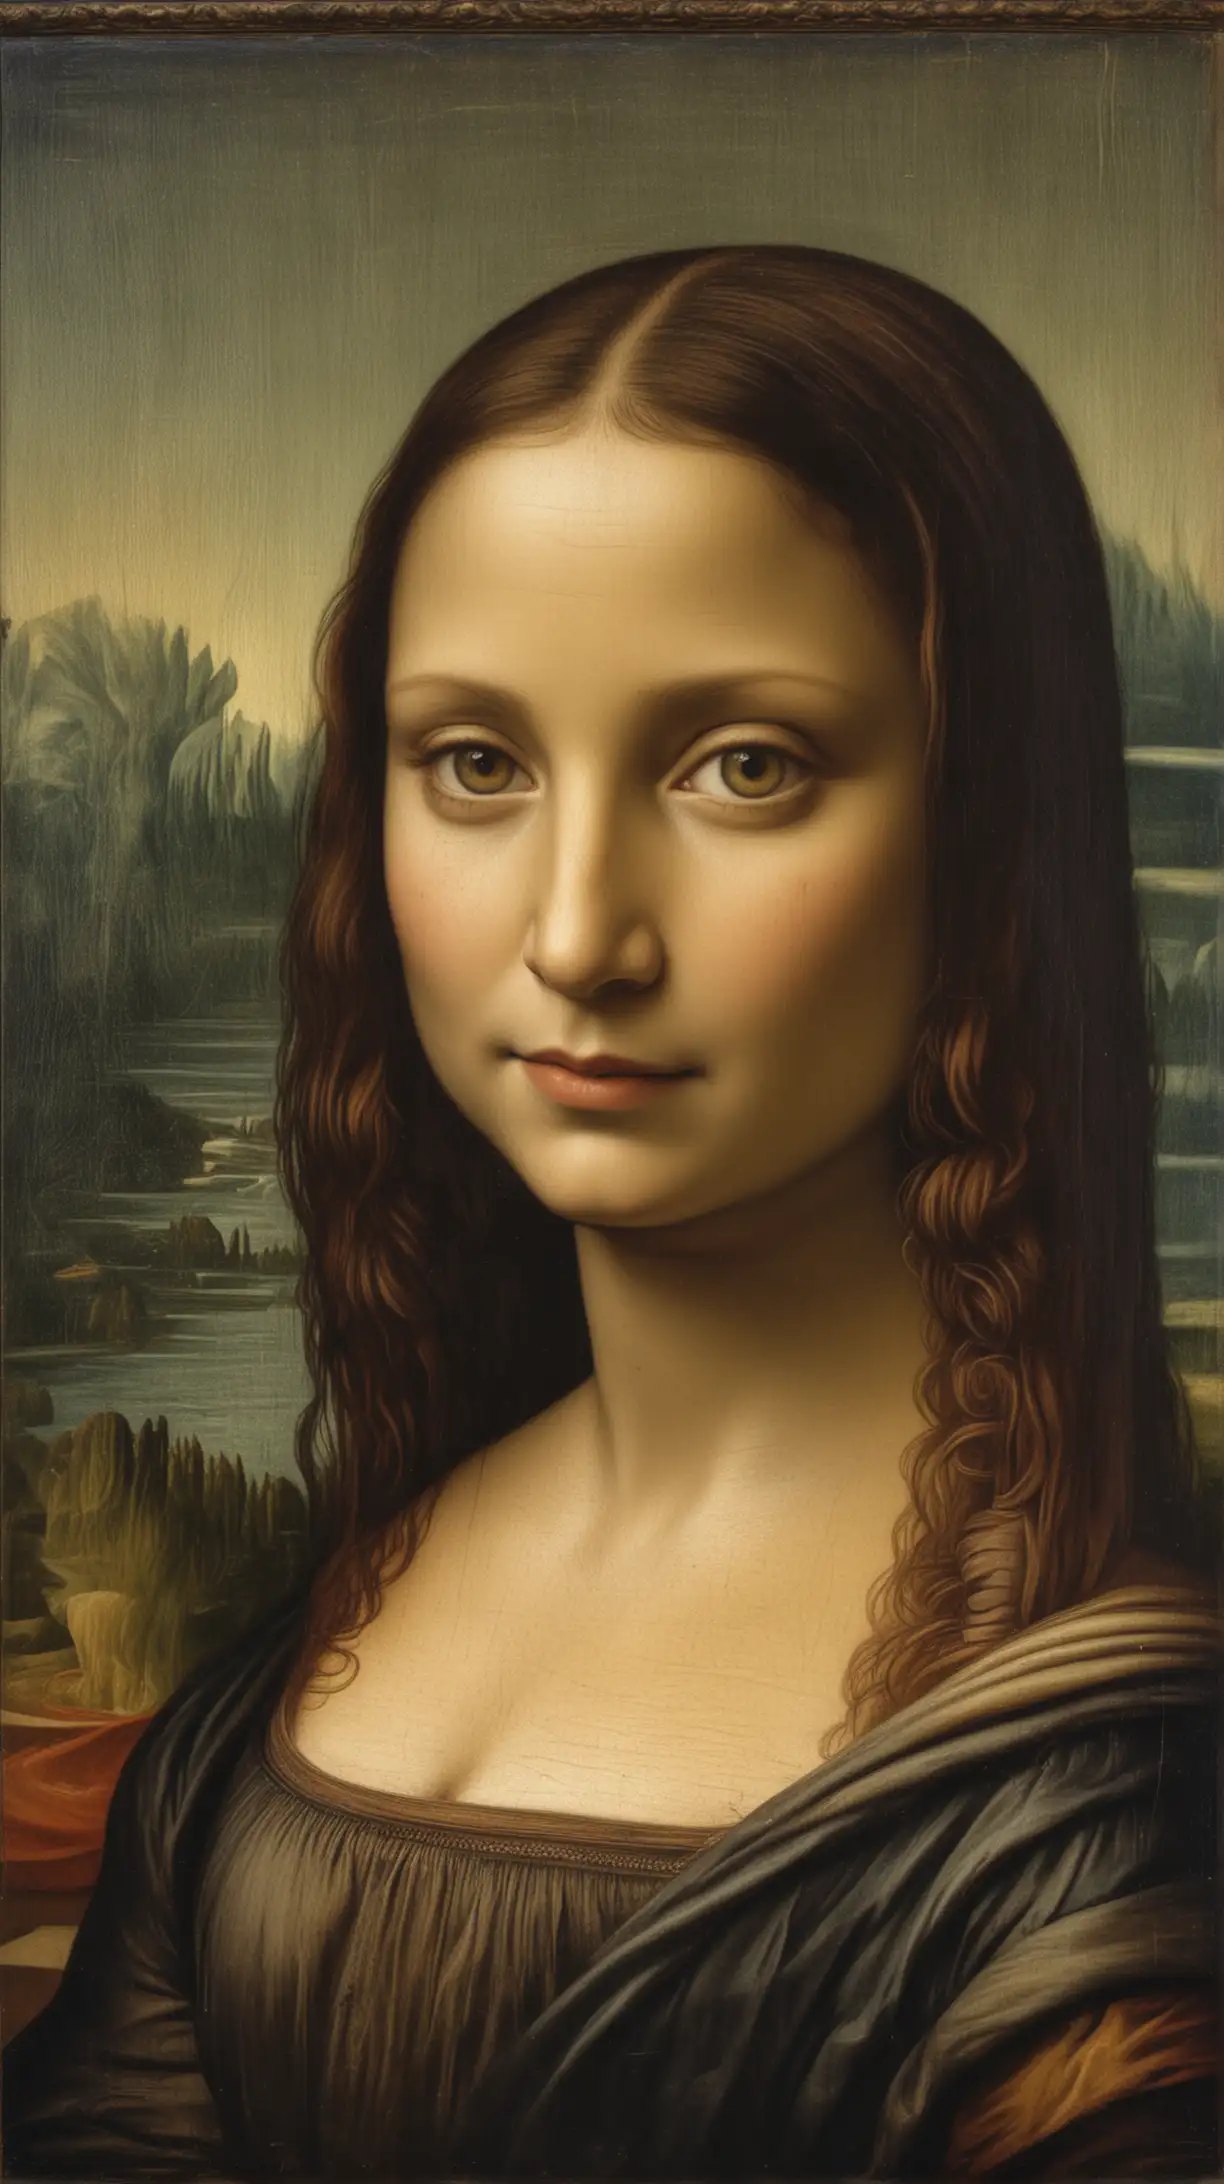 Mona Lisa by Leonardo da Vinci: 